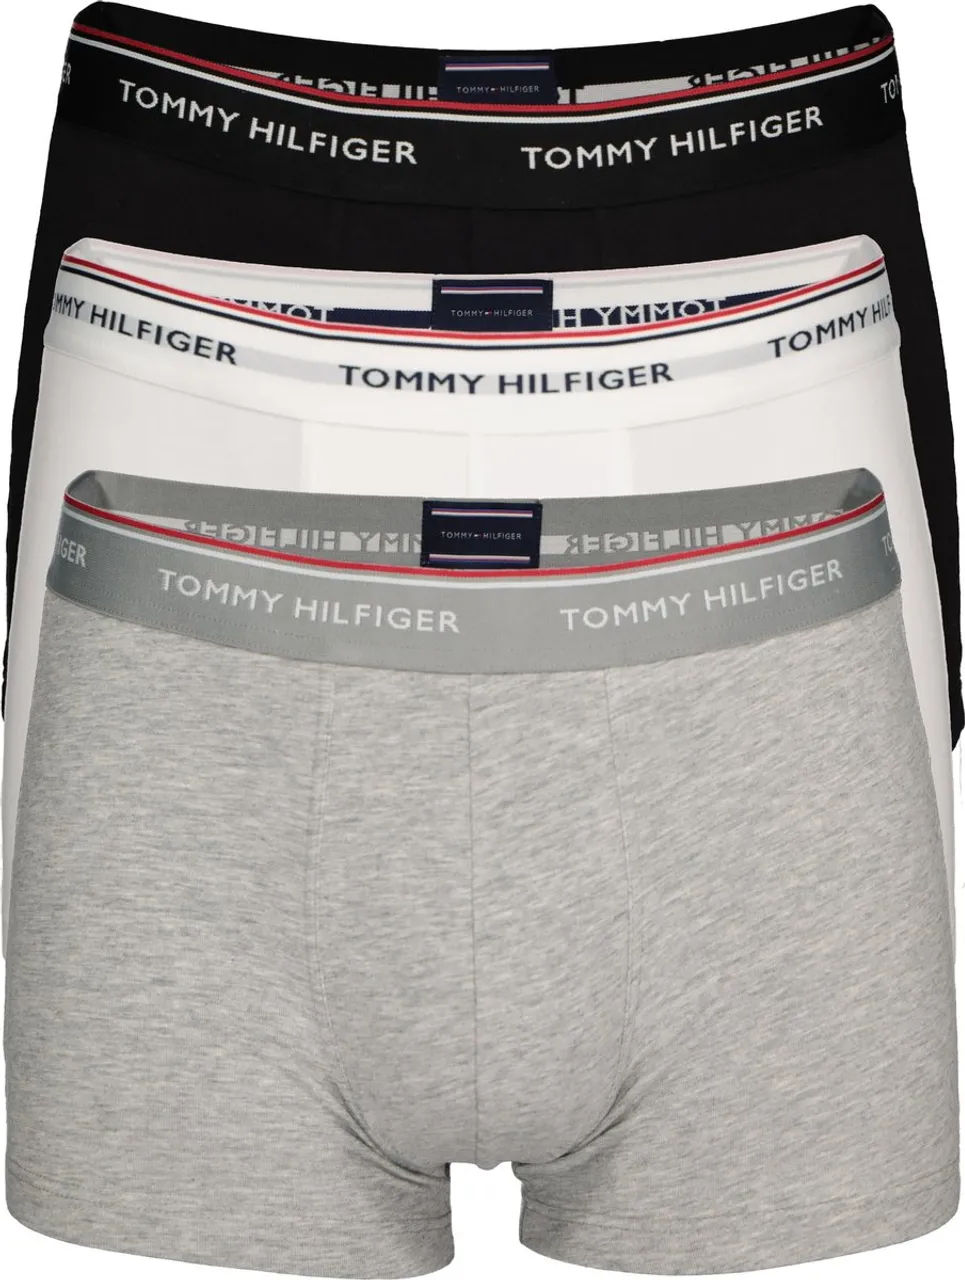 Tommy Hilfiger trunks (3-pack) - heren boxers normale lengte - zwart - wit en grijs